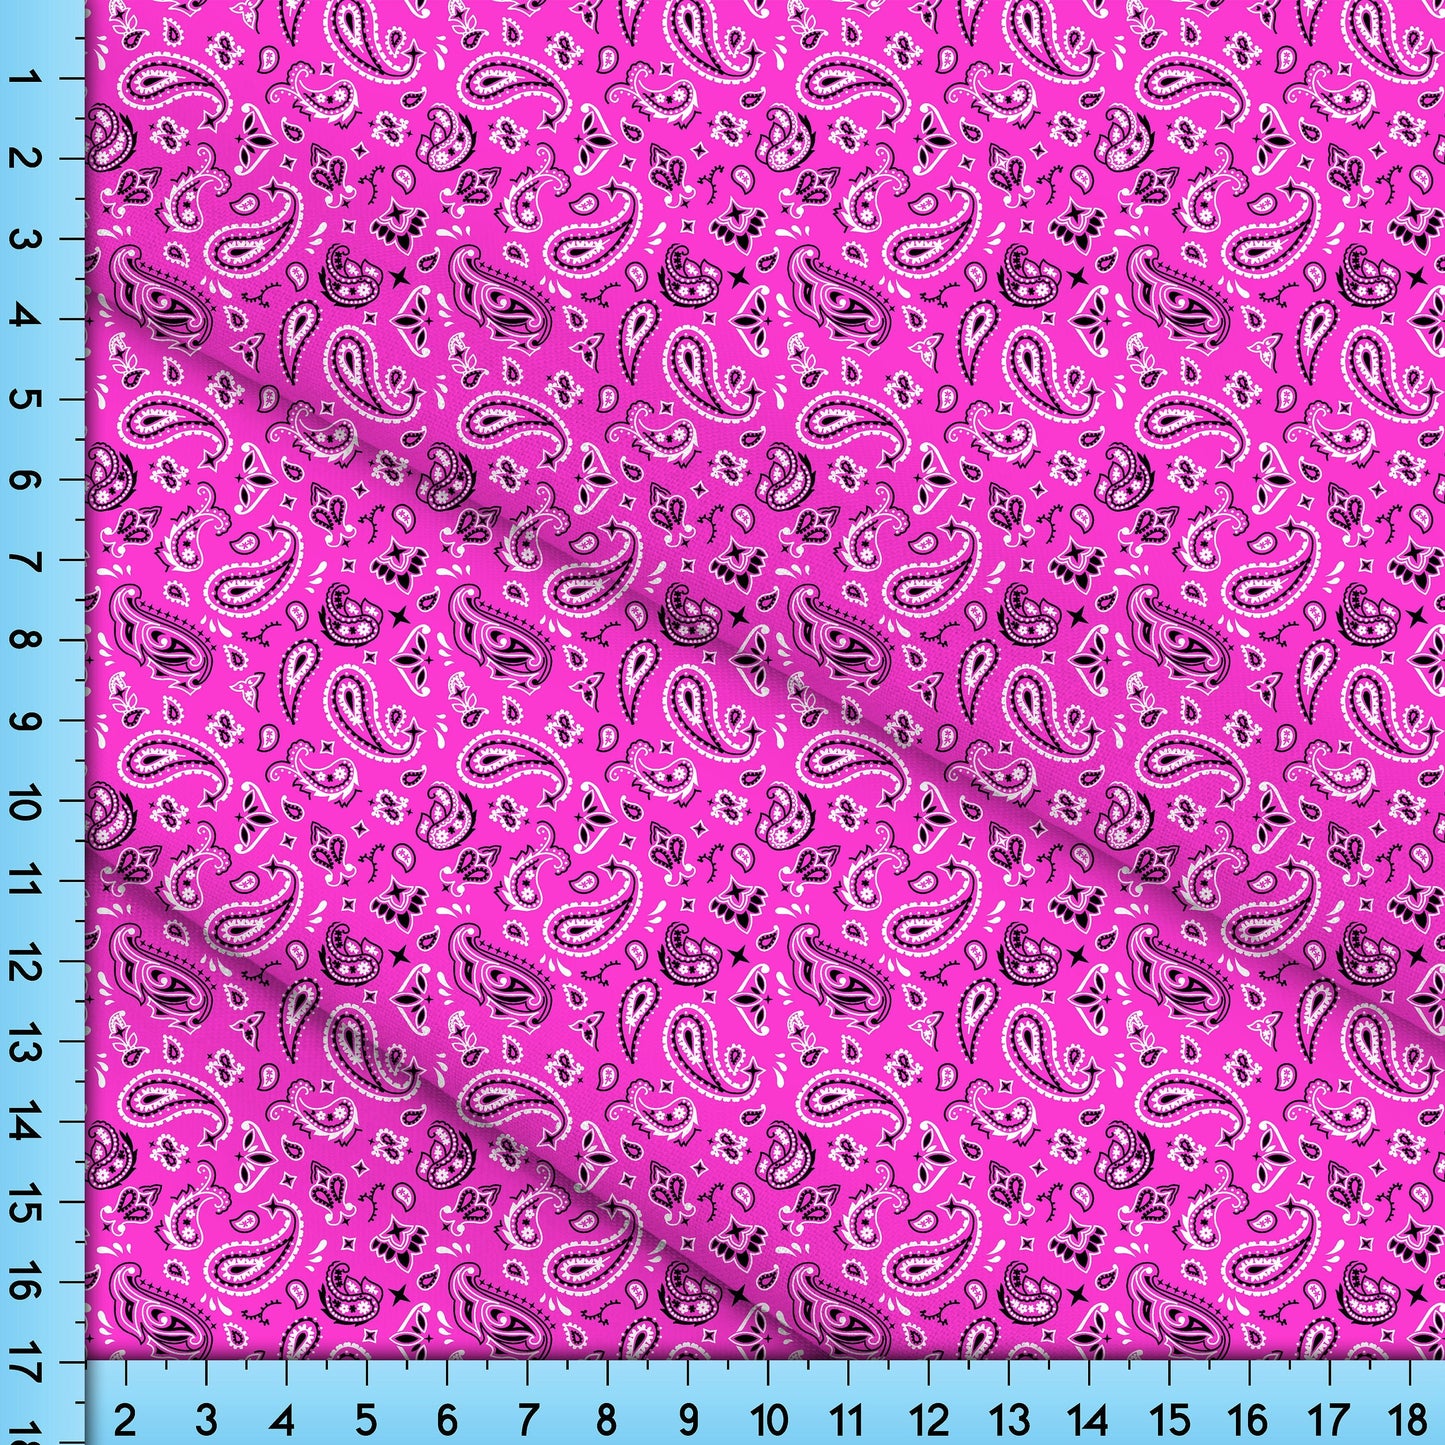 Hot Pink Bandana Paisley Fabric By the Yard, Fuchsia Western Boho Cowgirl Pattern, Womens Headband Summer Fashion Accessory, Headscarf Yoga